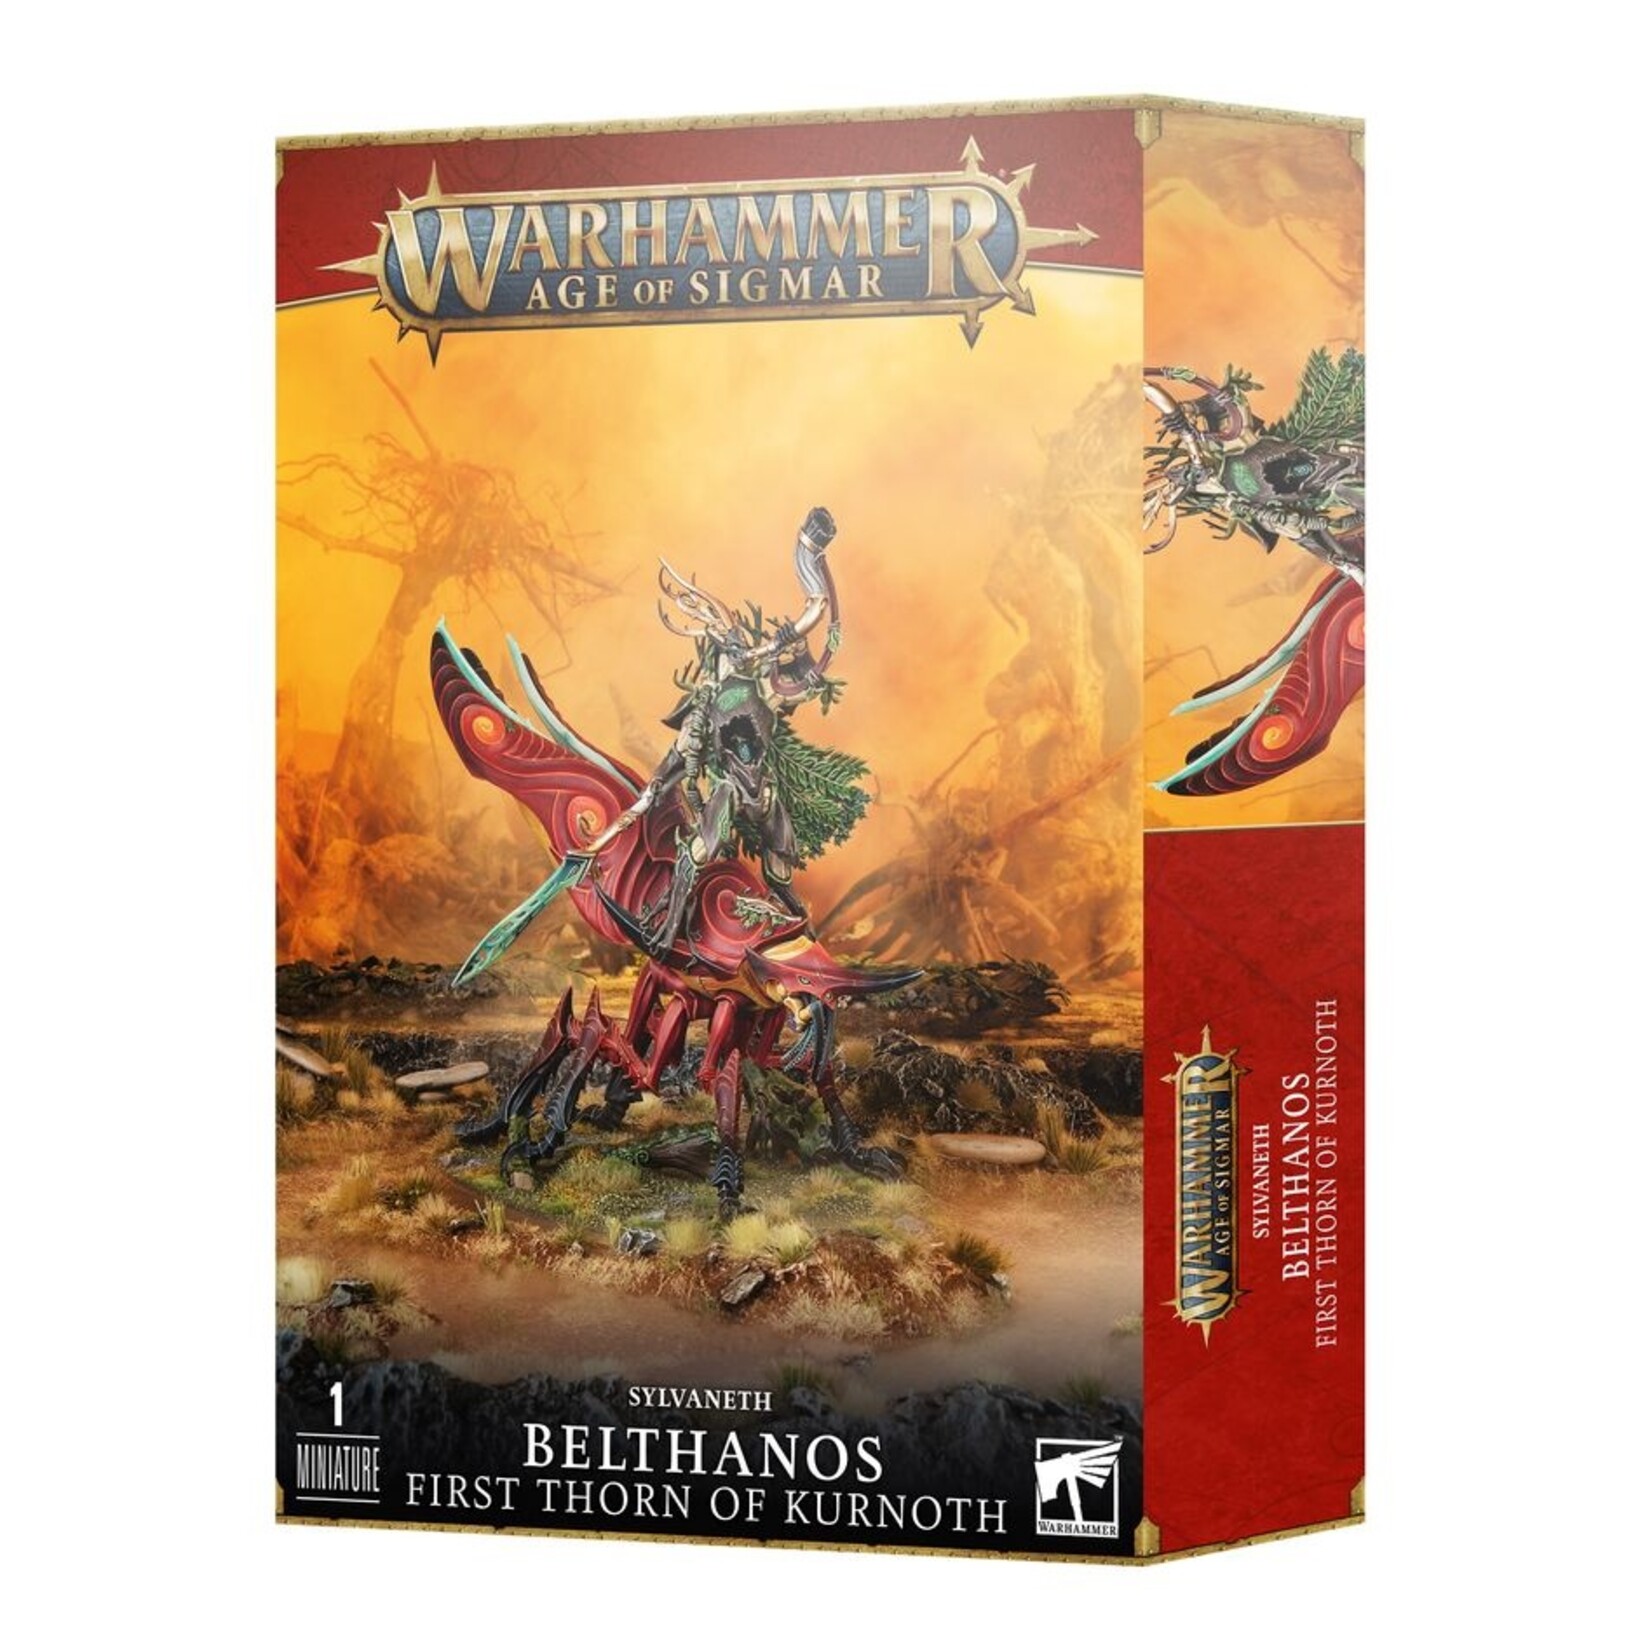 Warhammer Sylvaneth: Belthanos - First thorn of Kurnoth